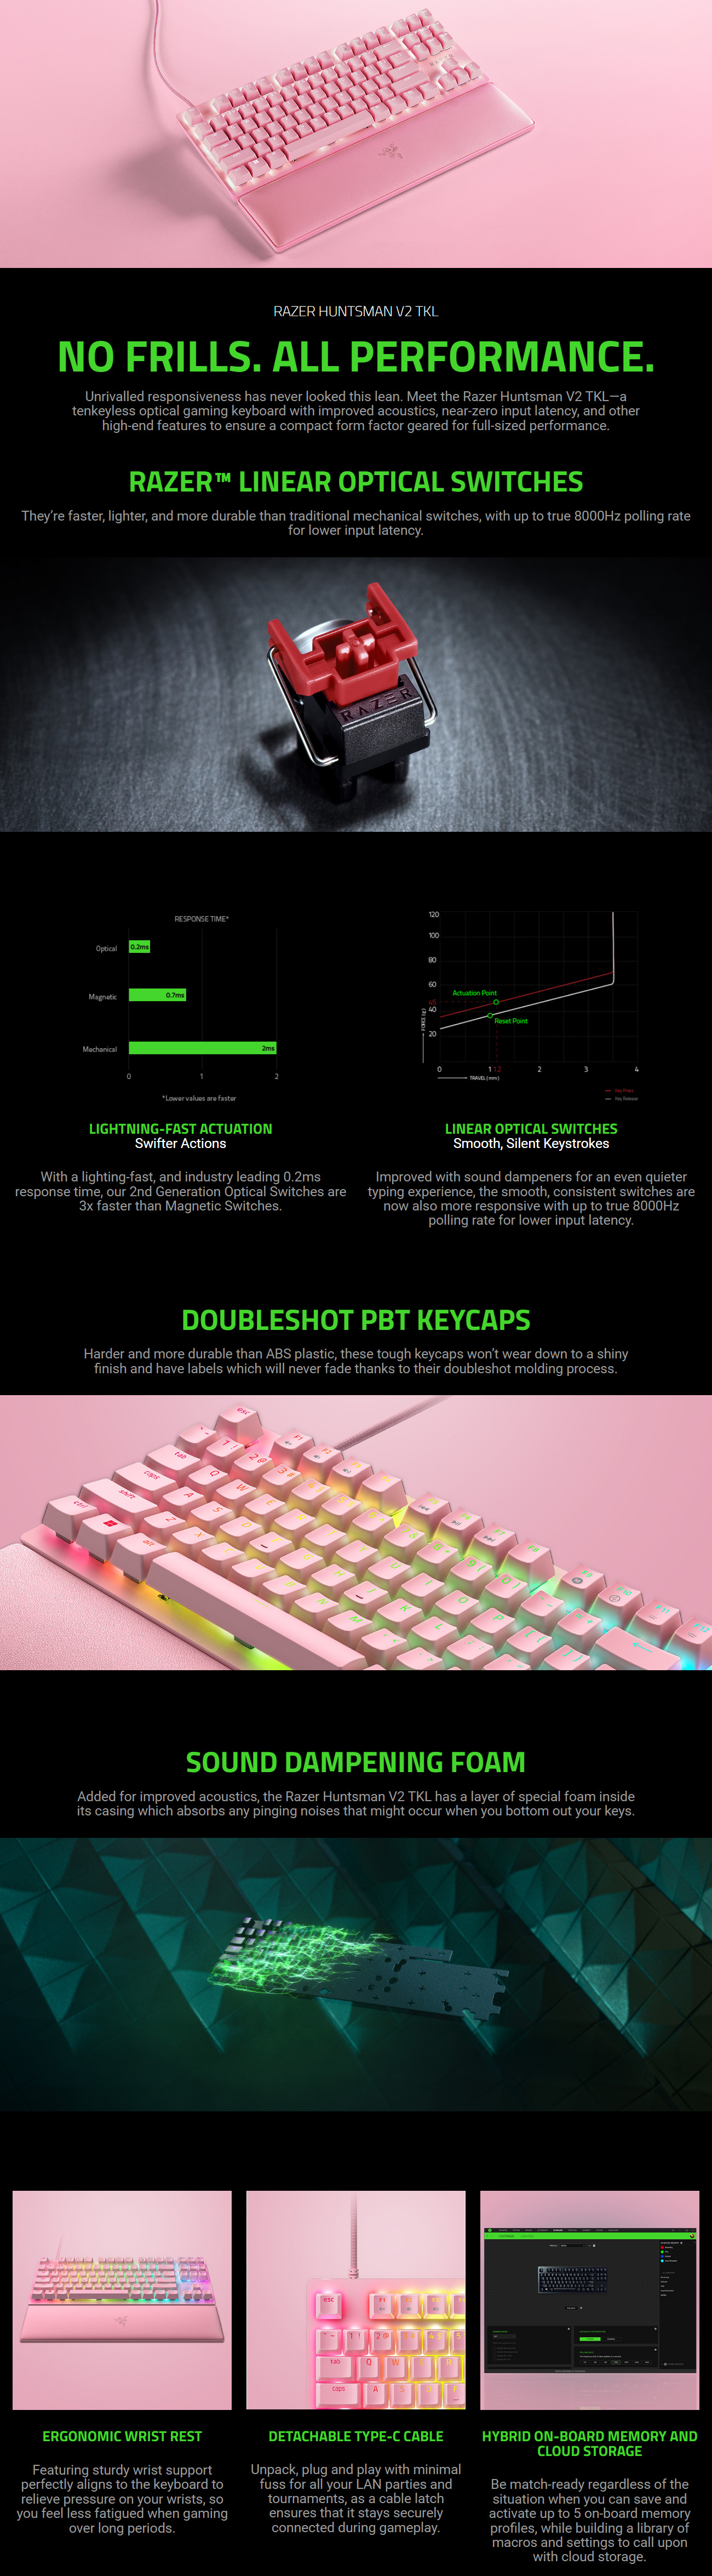 Keyboards-Razer-Huntsman-V2-Tenkeyless-Optical-Gaming-Keyboard-Linear-Red-Switch-Quartz-Edition-1